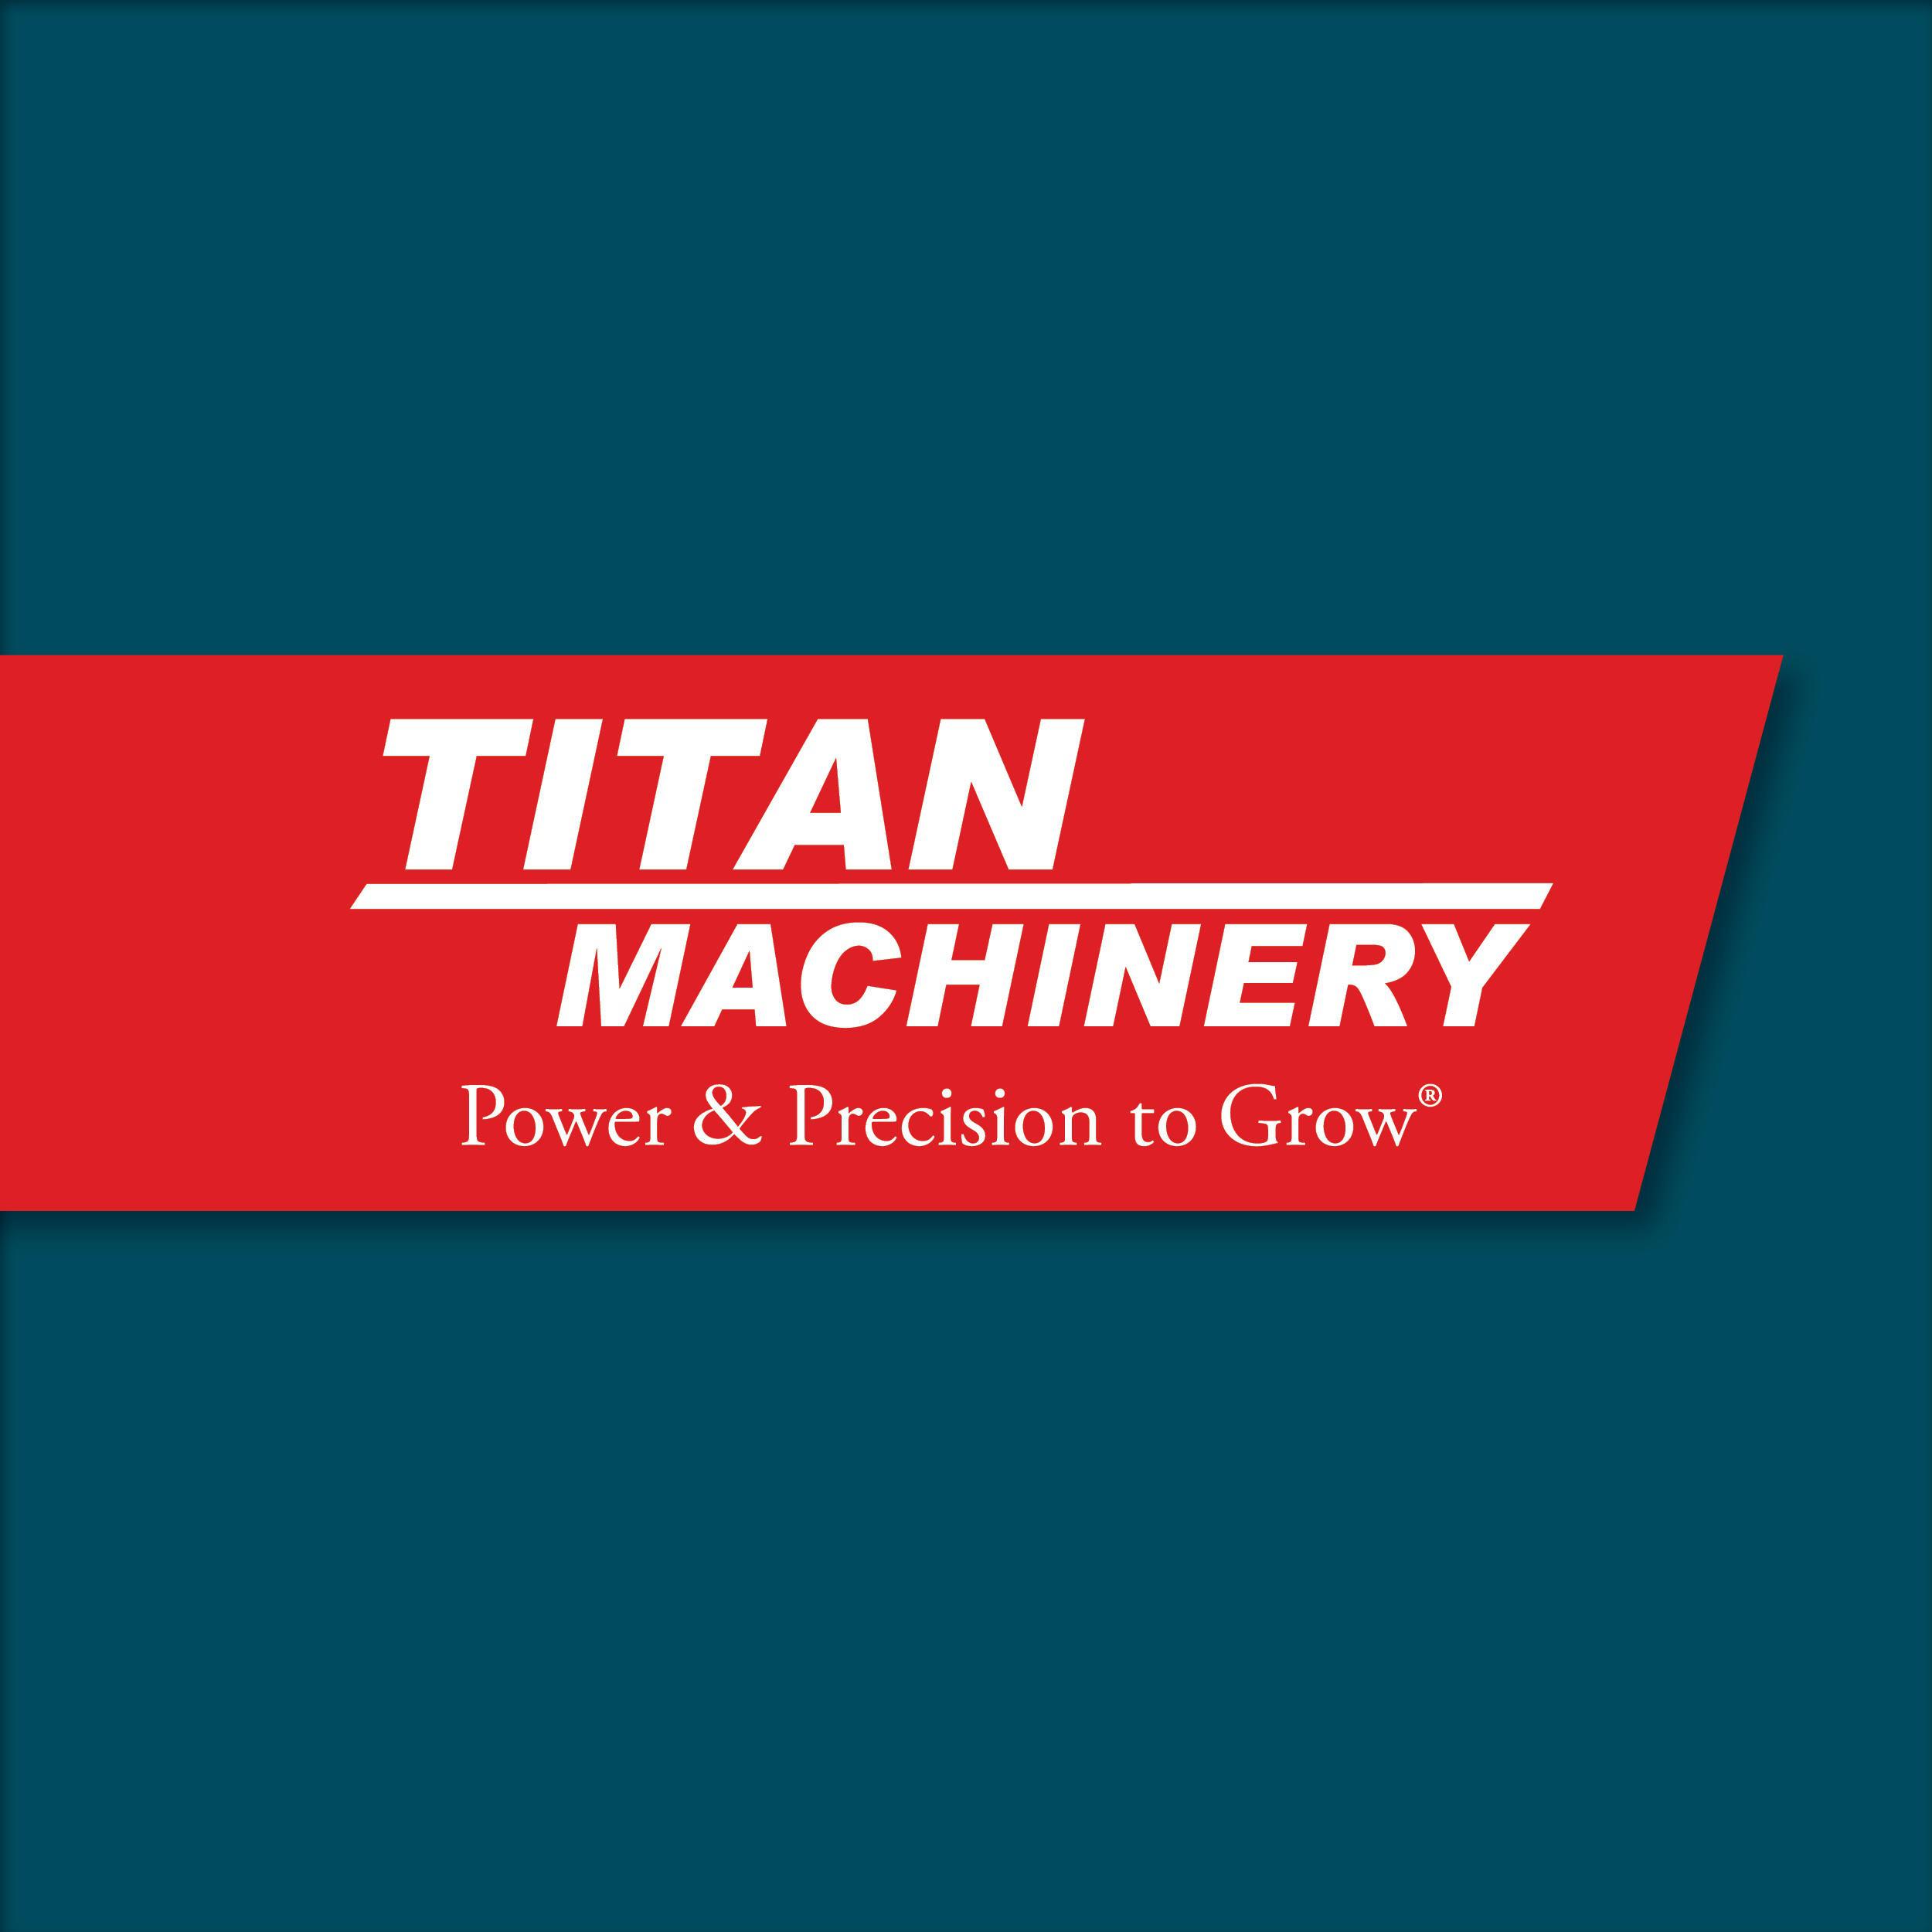 Titan Machinery Corporate Office